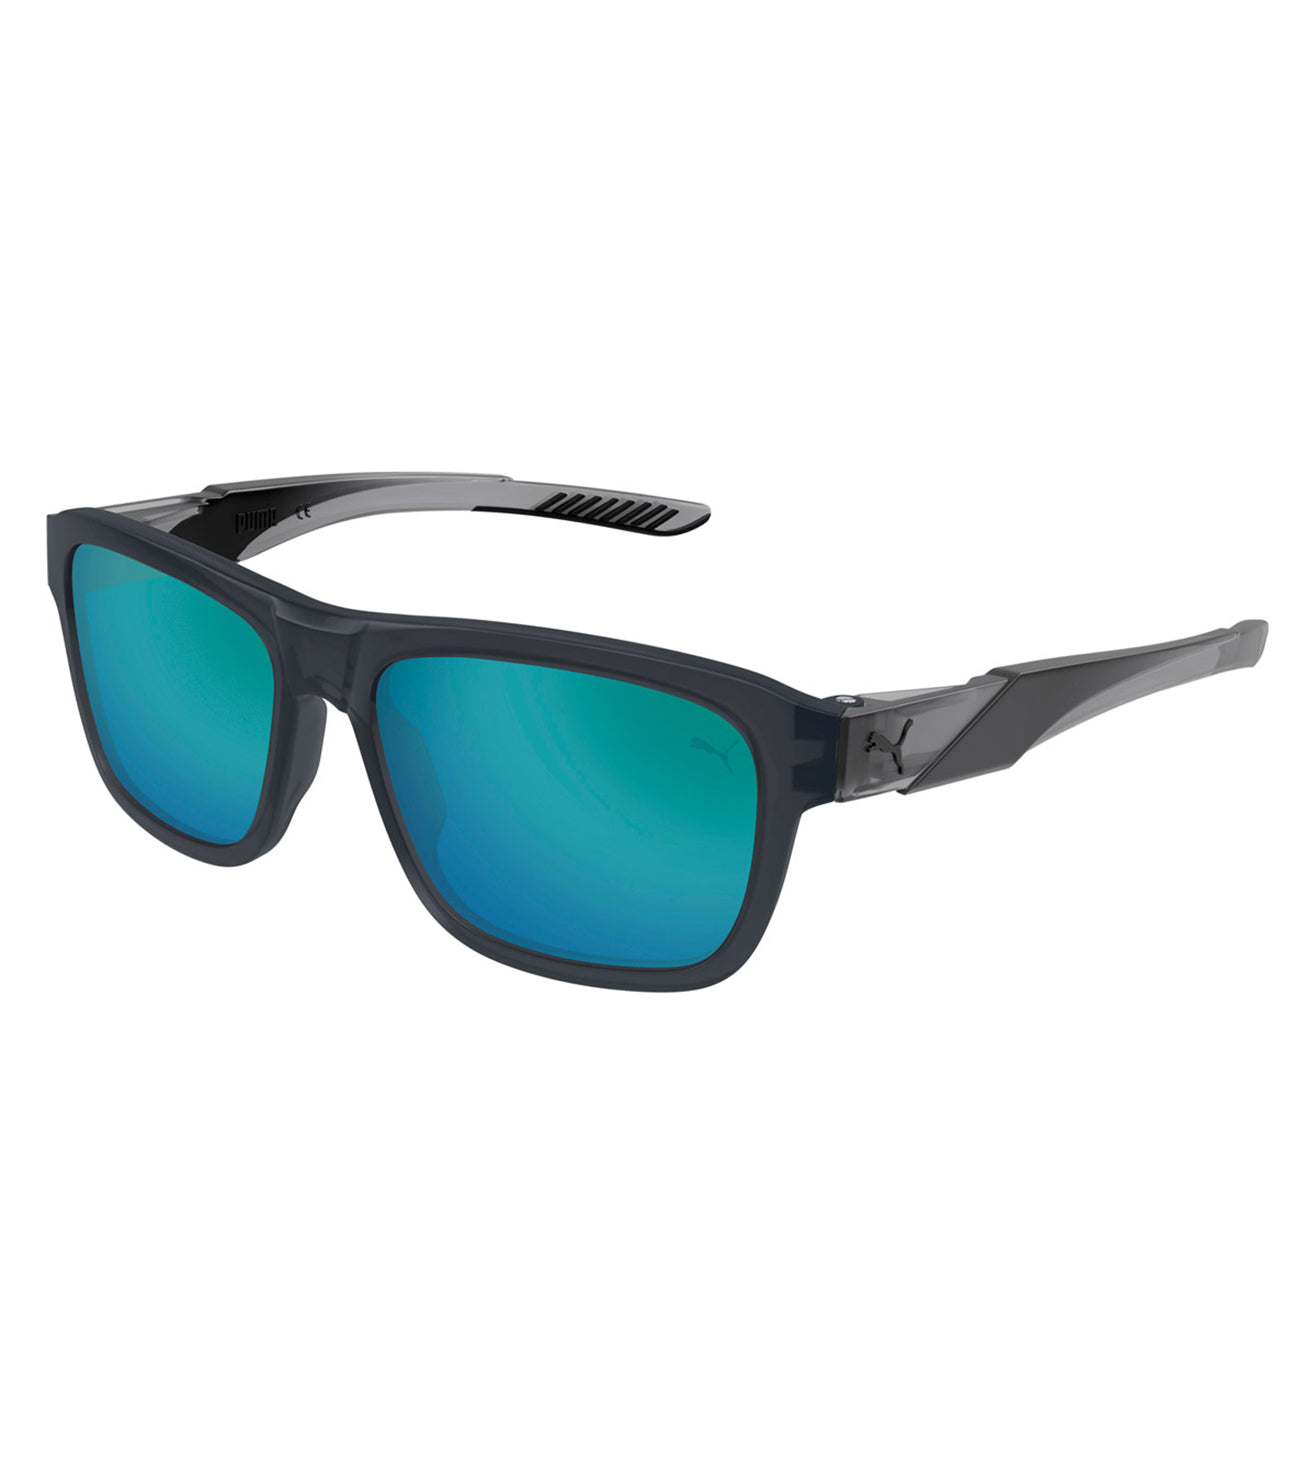 Puma Men's Blue Mirrored Polarized Rectangular Sunglasses